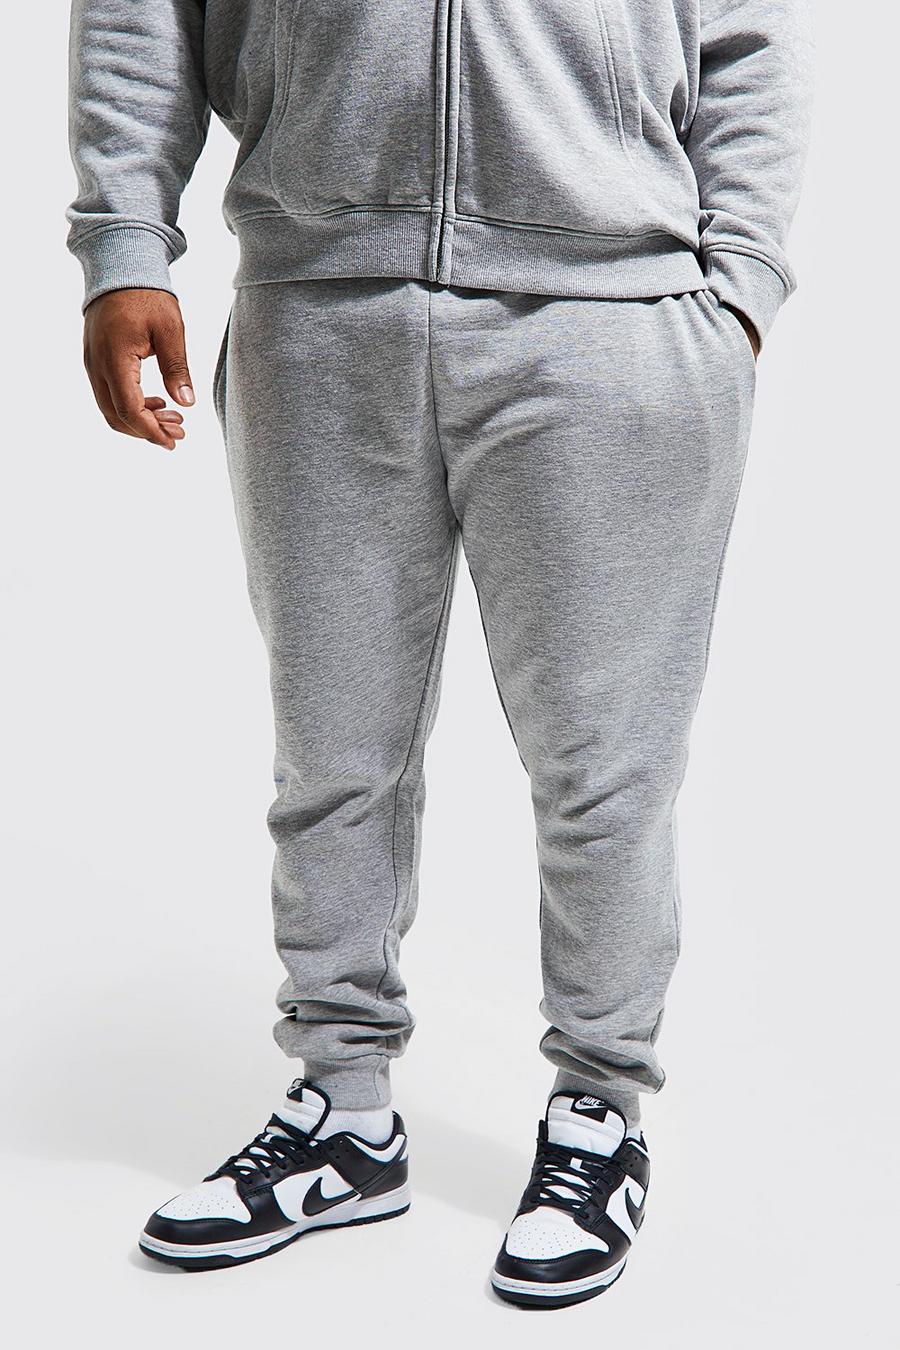 Pantalón deportivo Plus pitillo básico con algodón ecológico, Grey marl gris